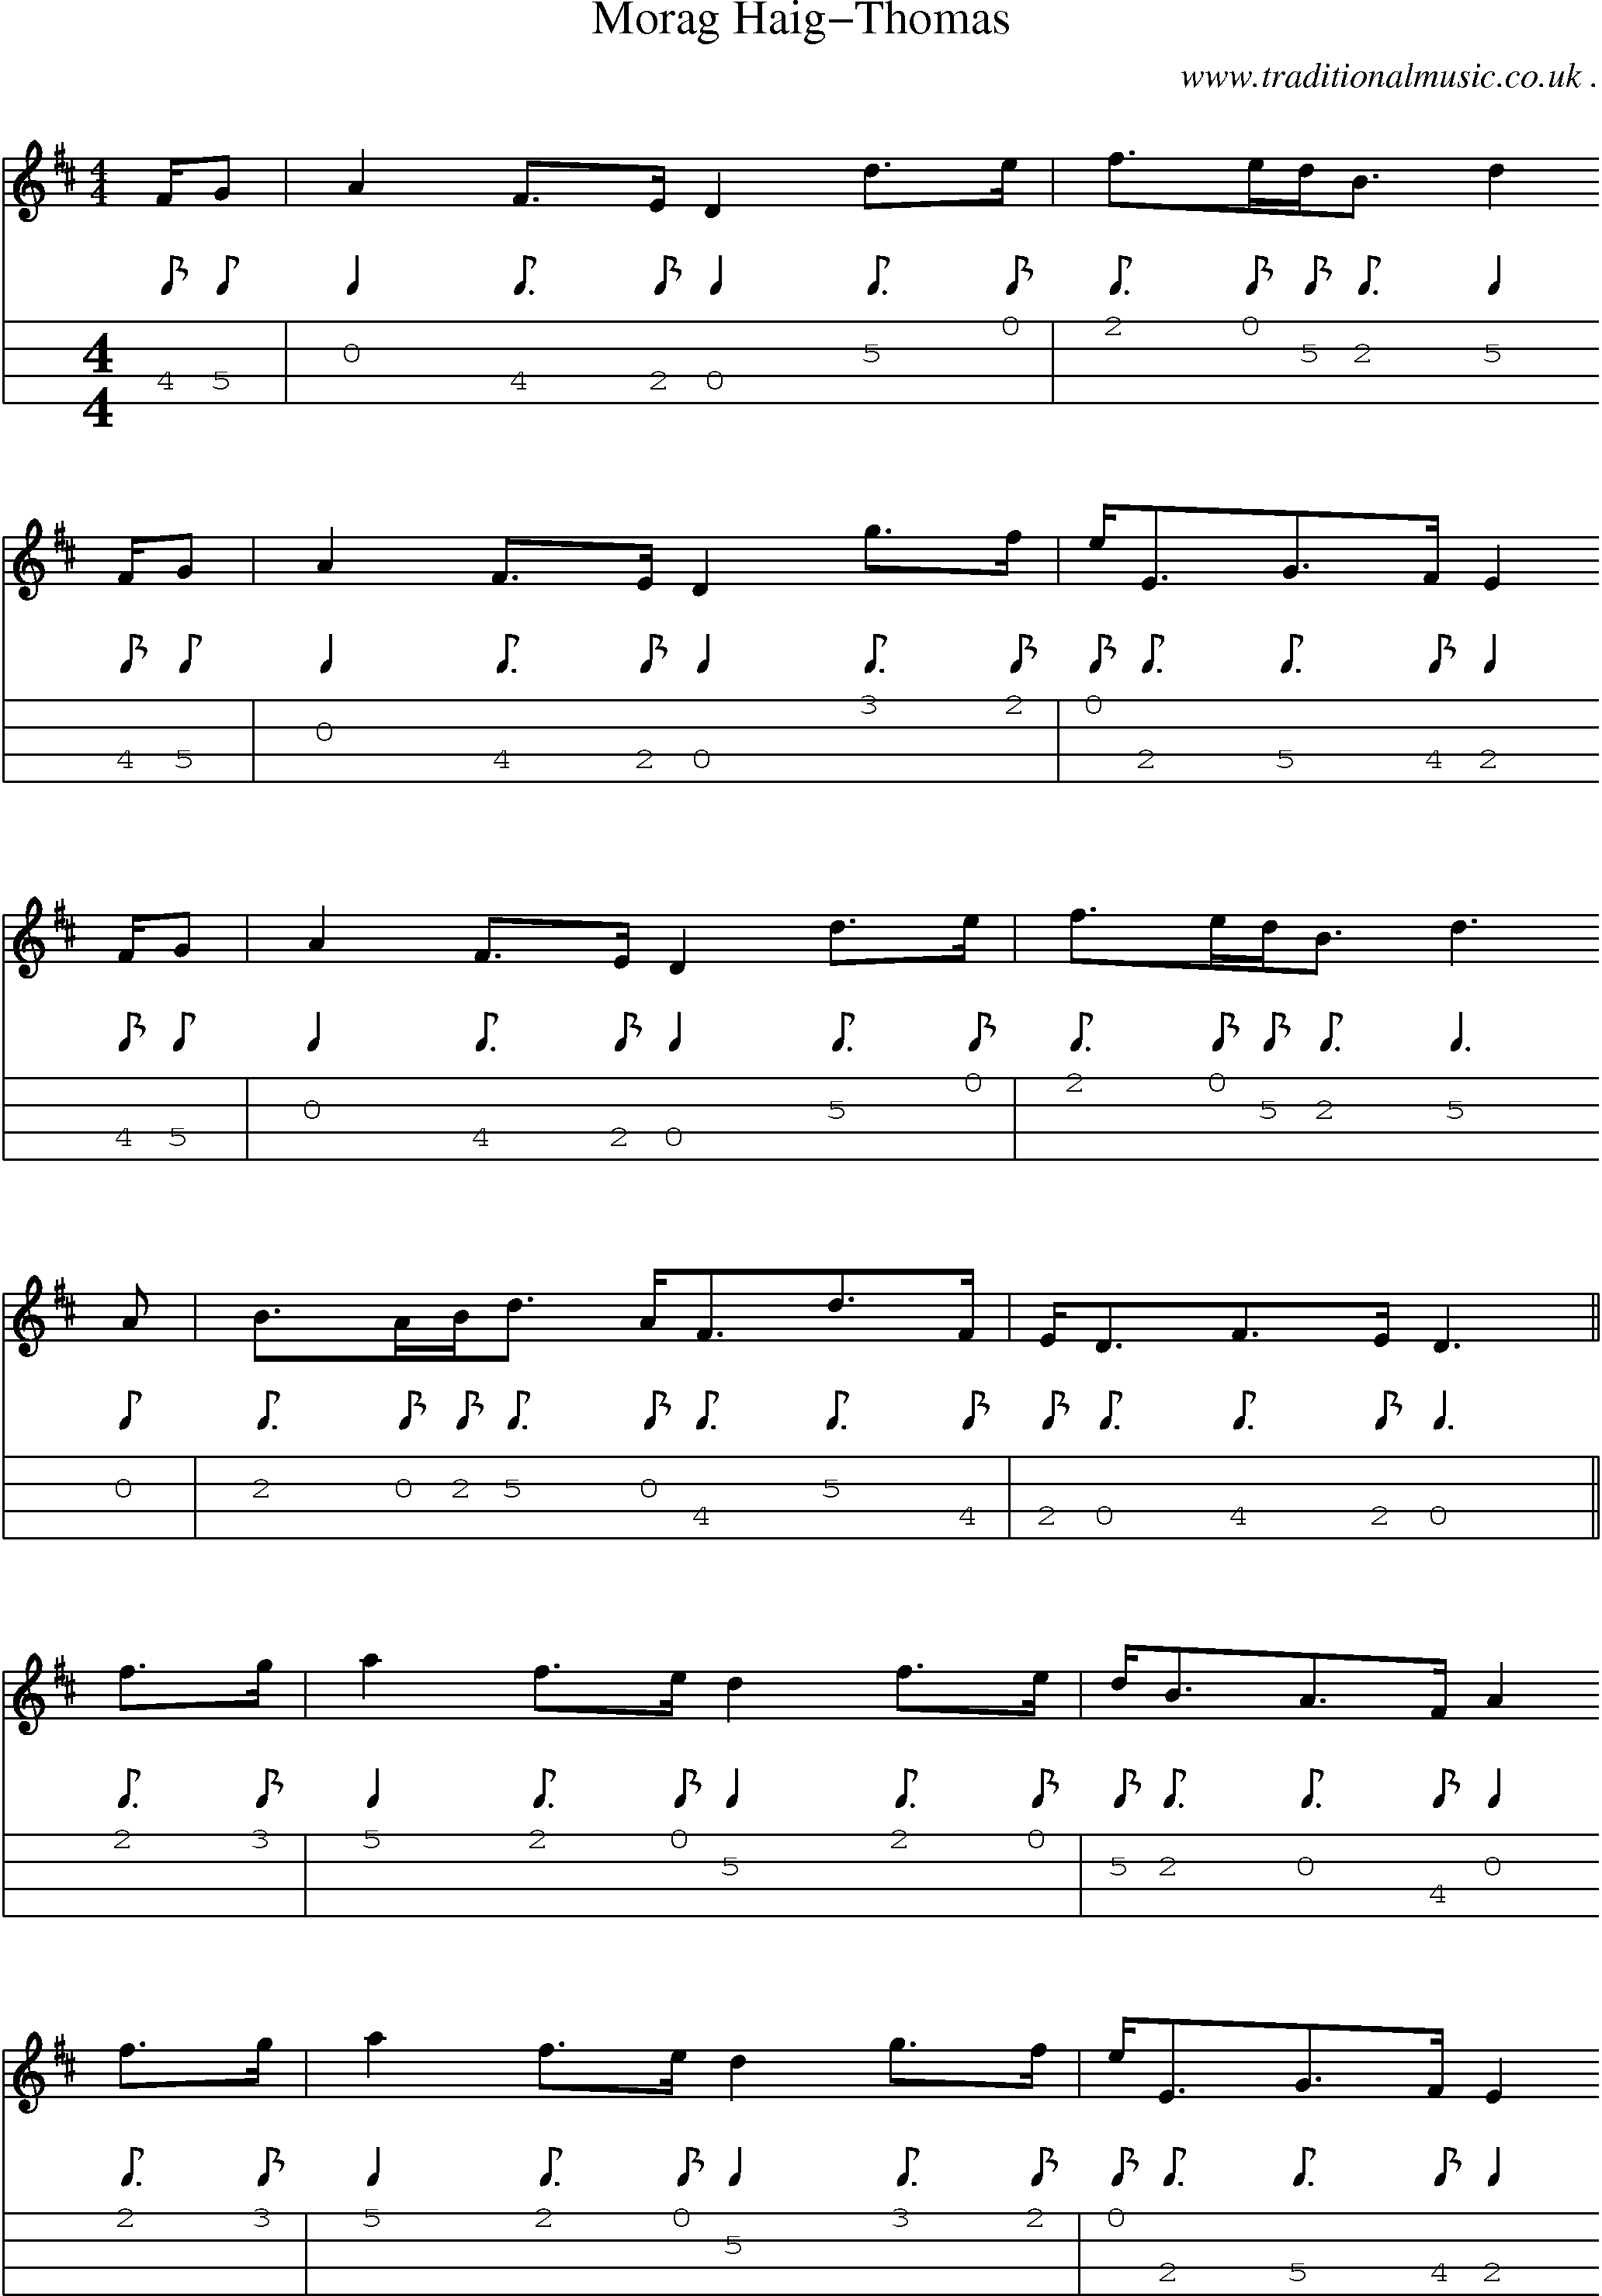 Sheet-music  score, Chords and Mandolin Tabs for Morag Haig-thomas